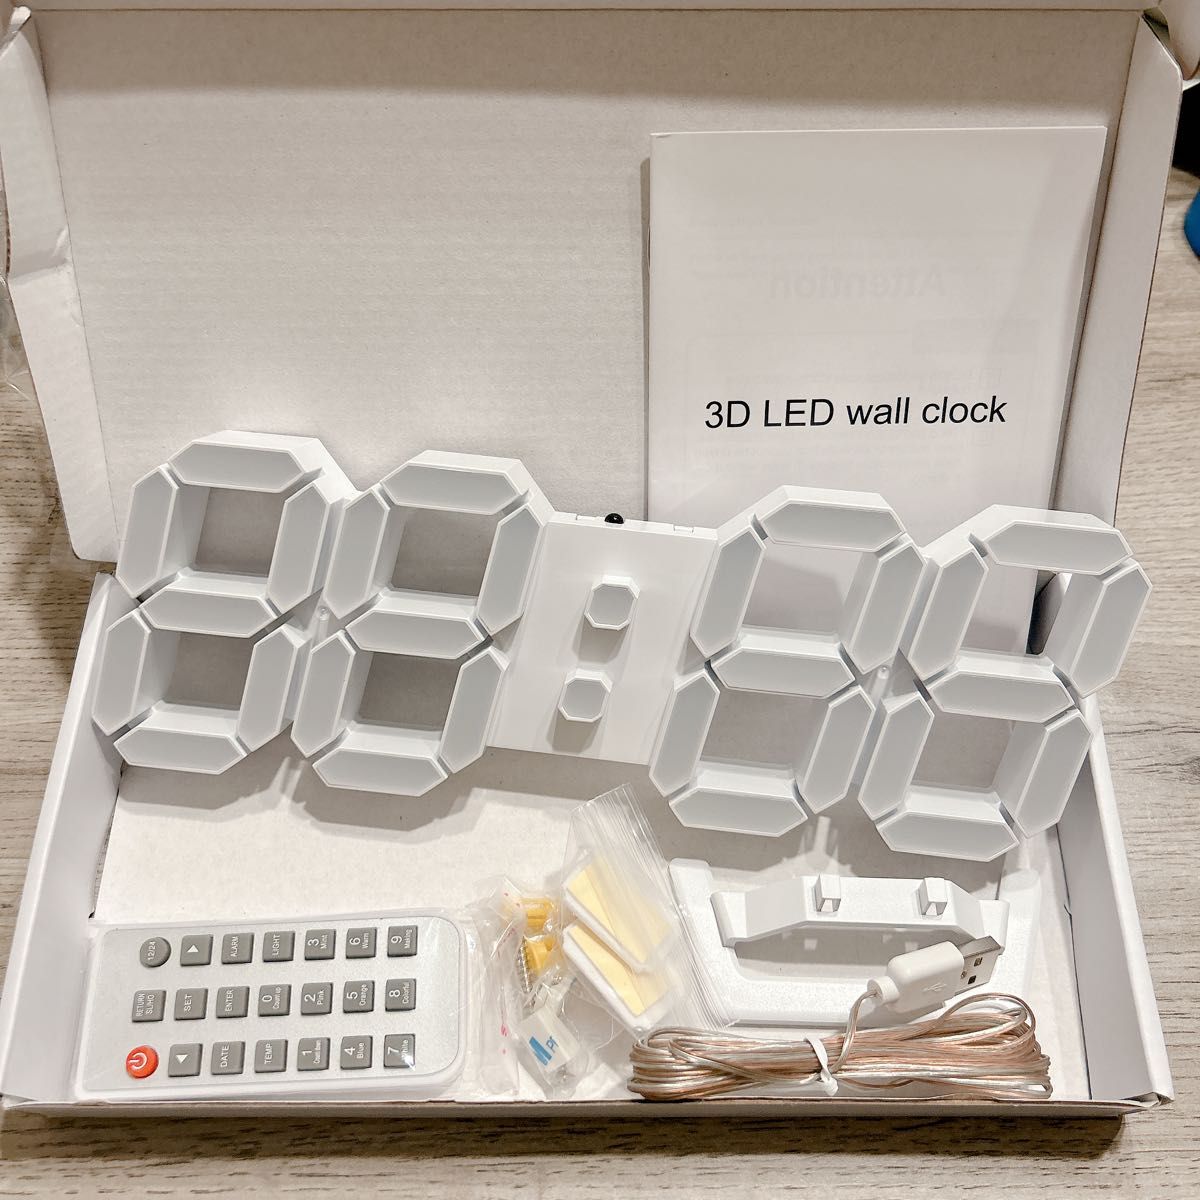 LEDデジタル時計目覚まし時計 3D LED時計置き時計掛け時計アラーム機能付き インテリア